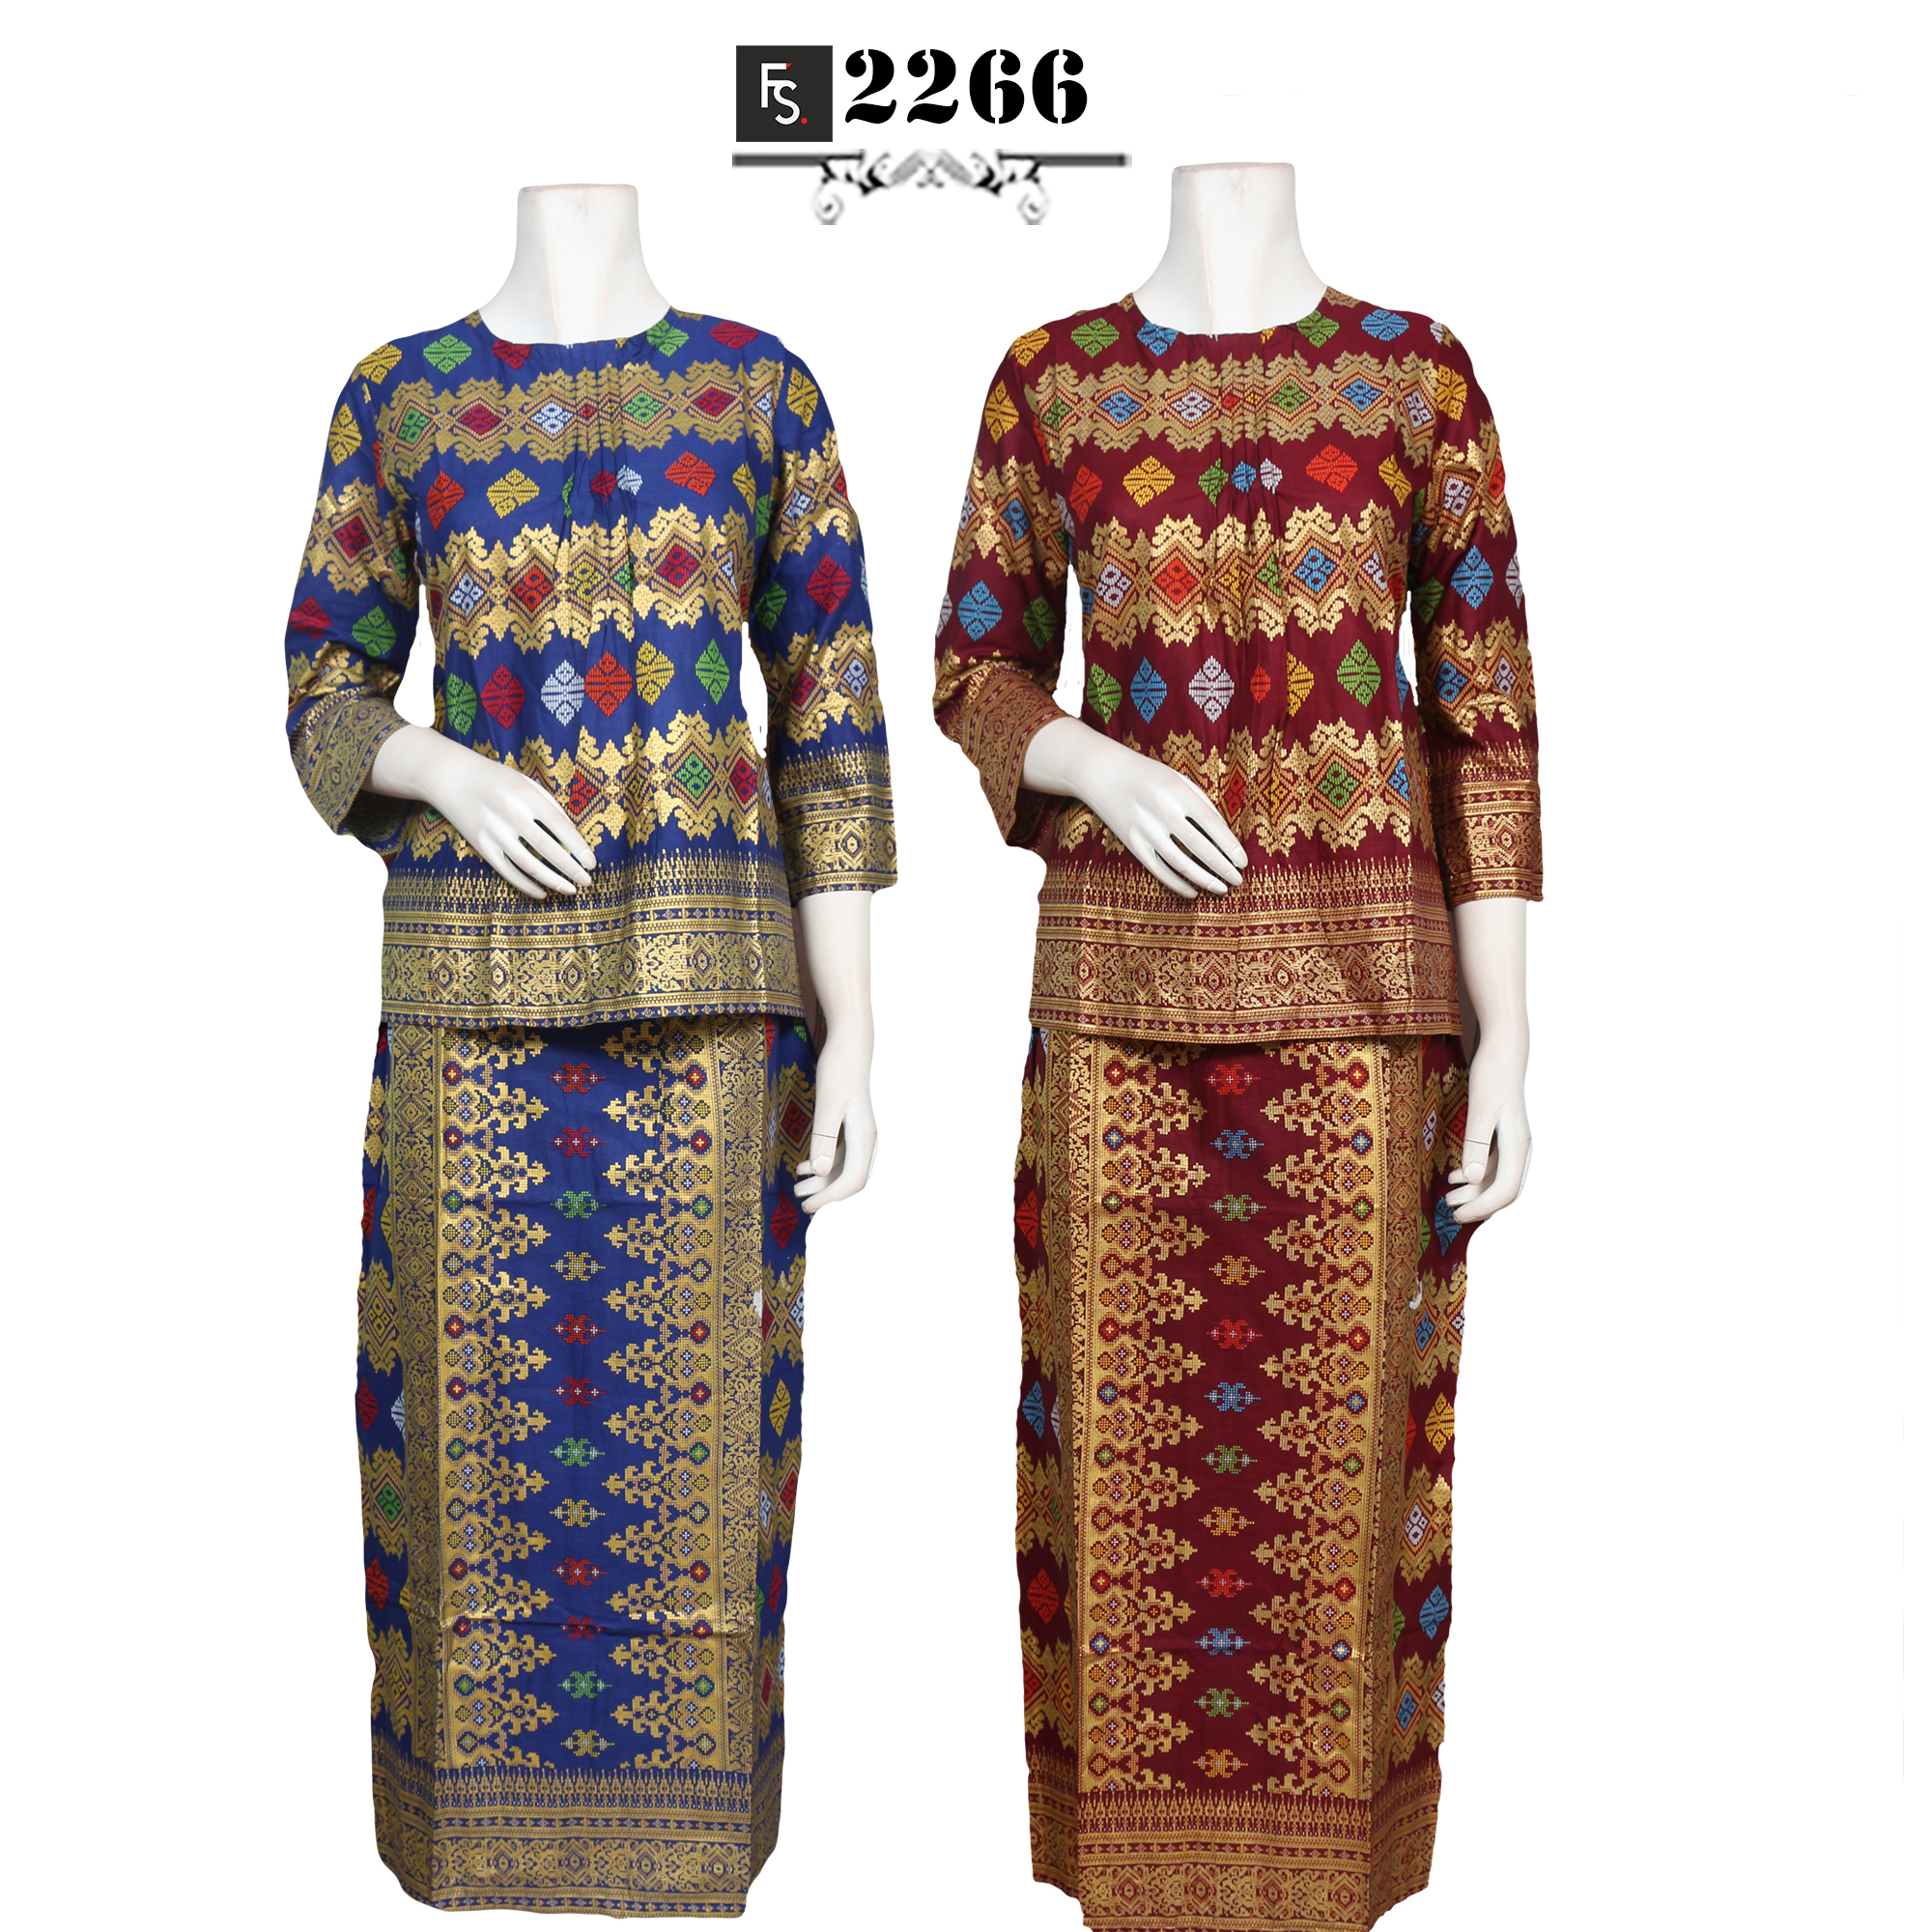 Setelan Baju Pesta Batik FS2266 Fika Shop